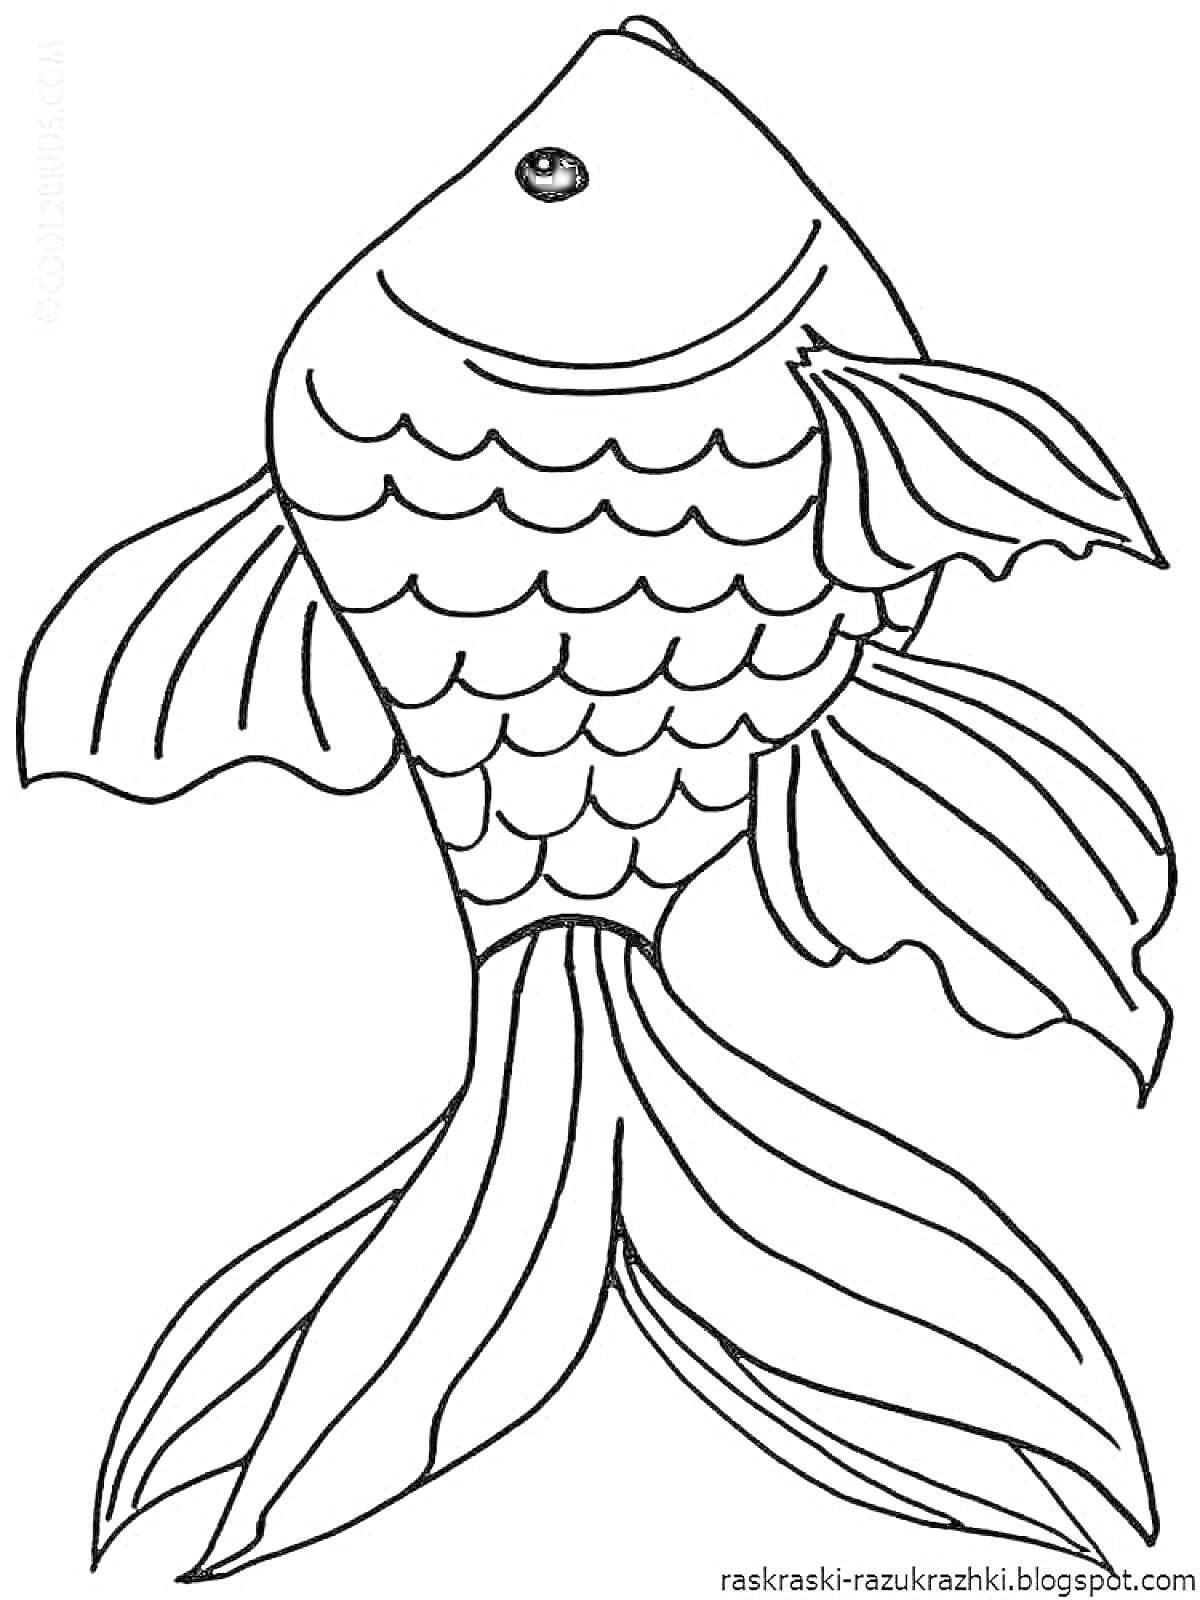 На раскраске изображено: Золотая рыбка, Рыба, Чешуя, Плавники, Хвост